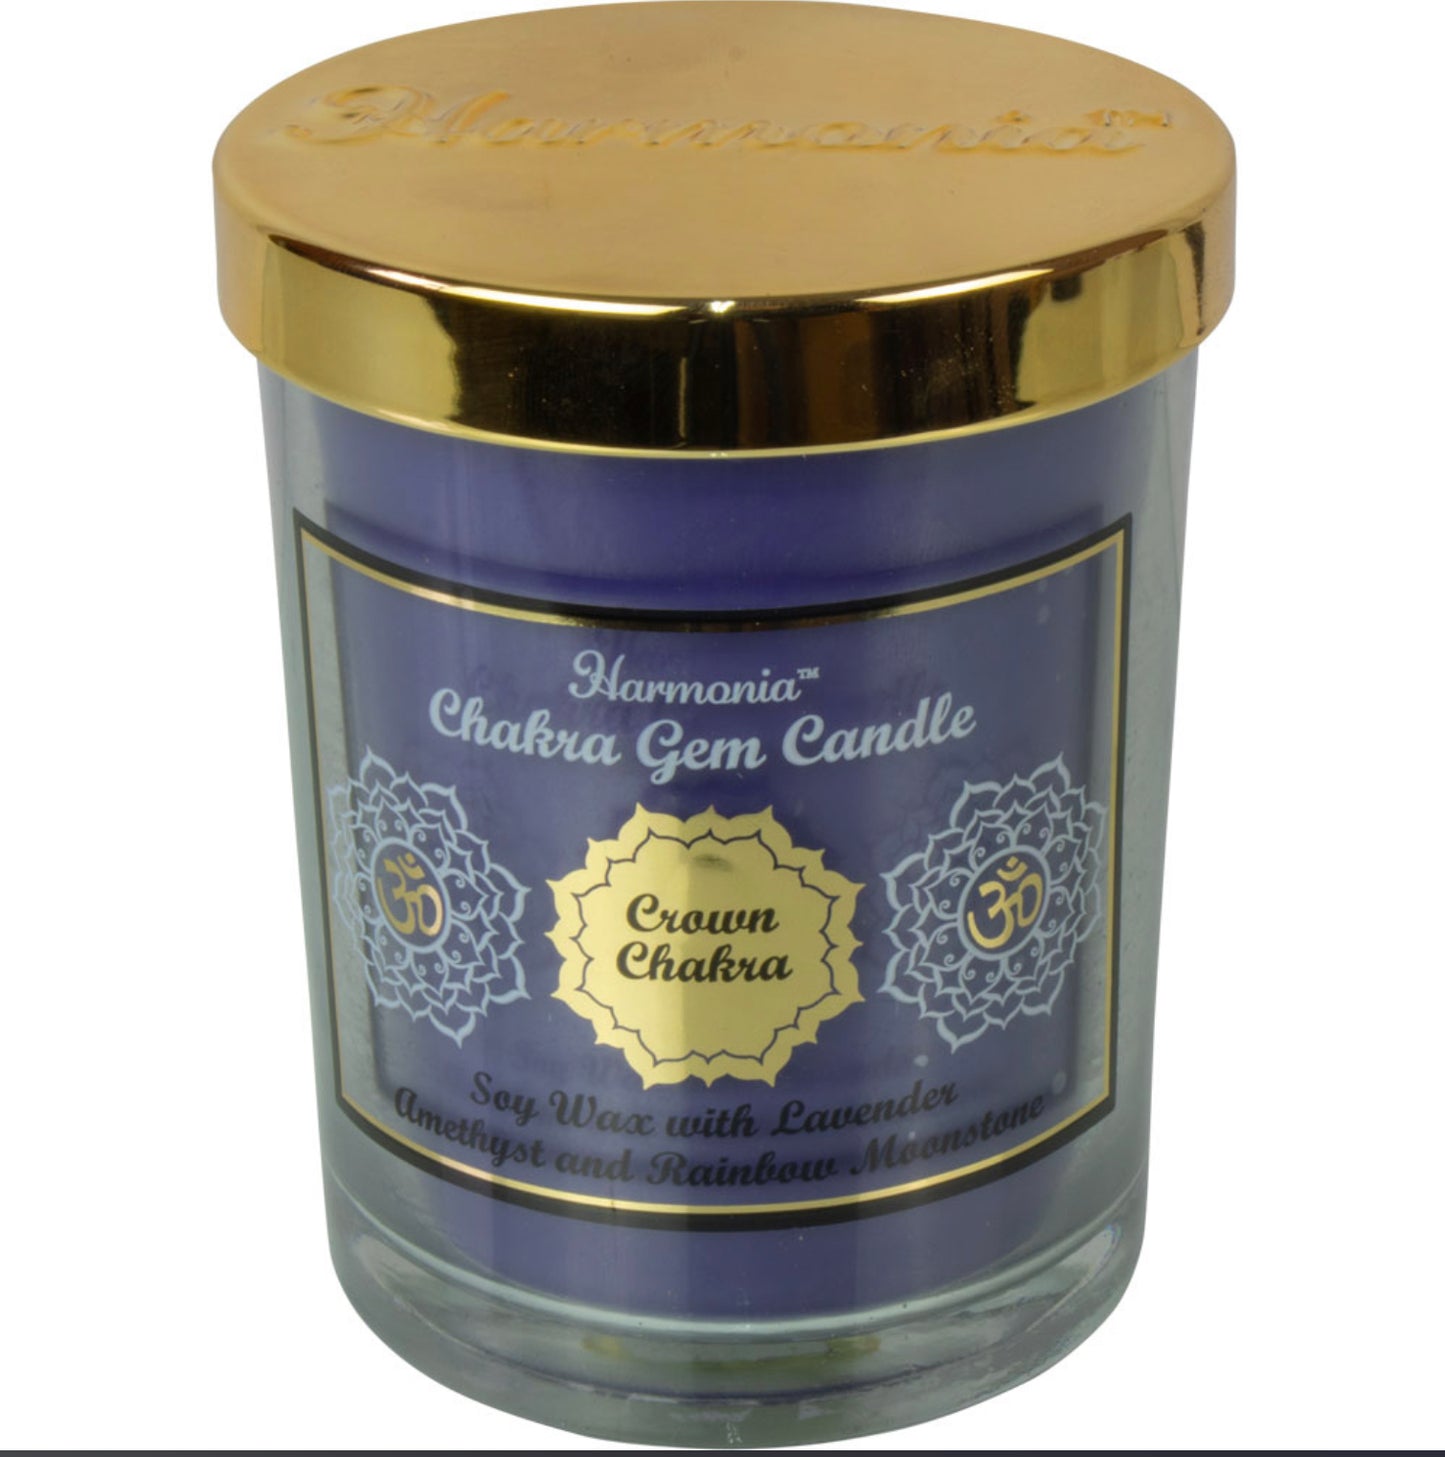 Harmonia Soy Gem Candle - Crown Chakra - Amethyst & Rainbow Moonstone - Lavender Scented